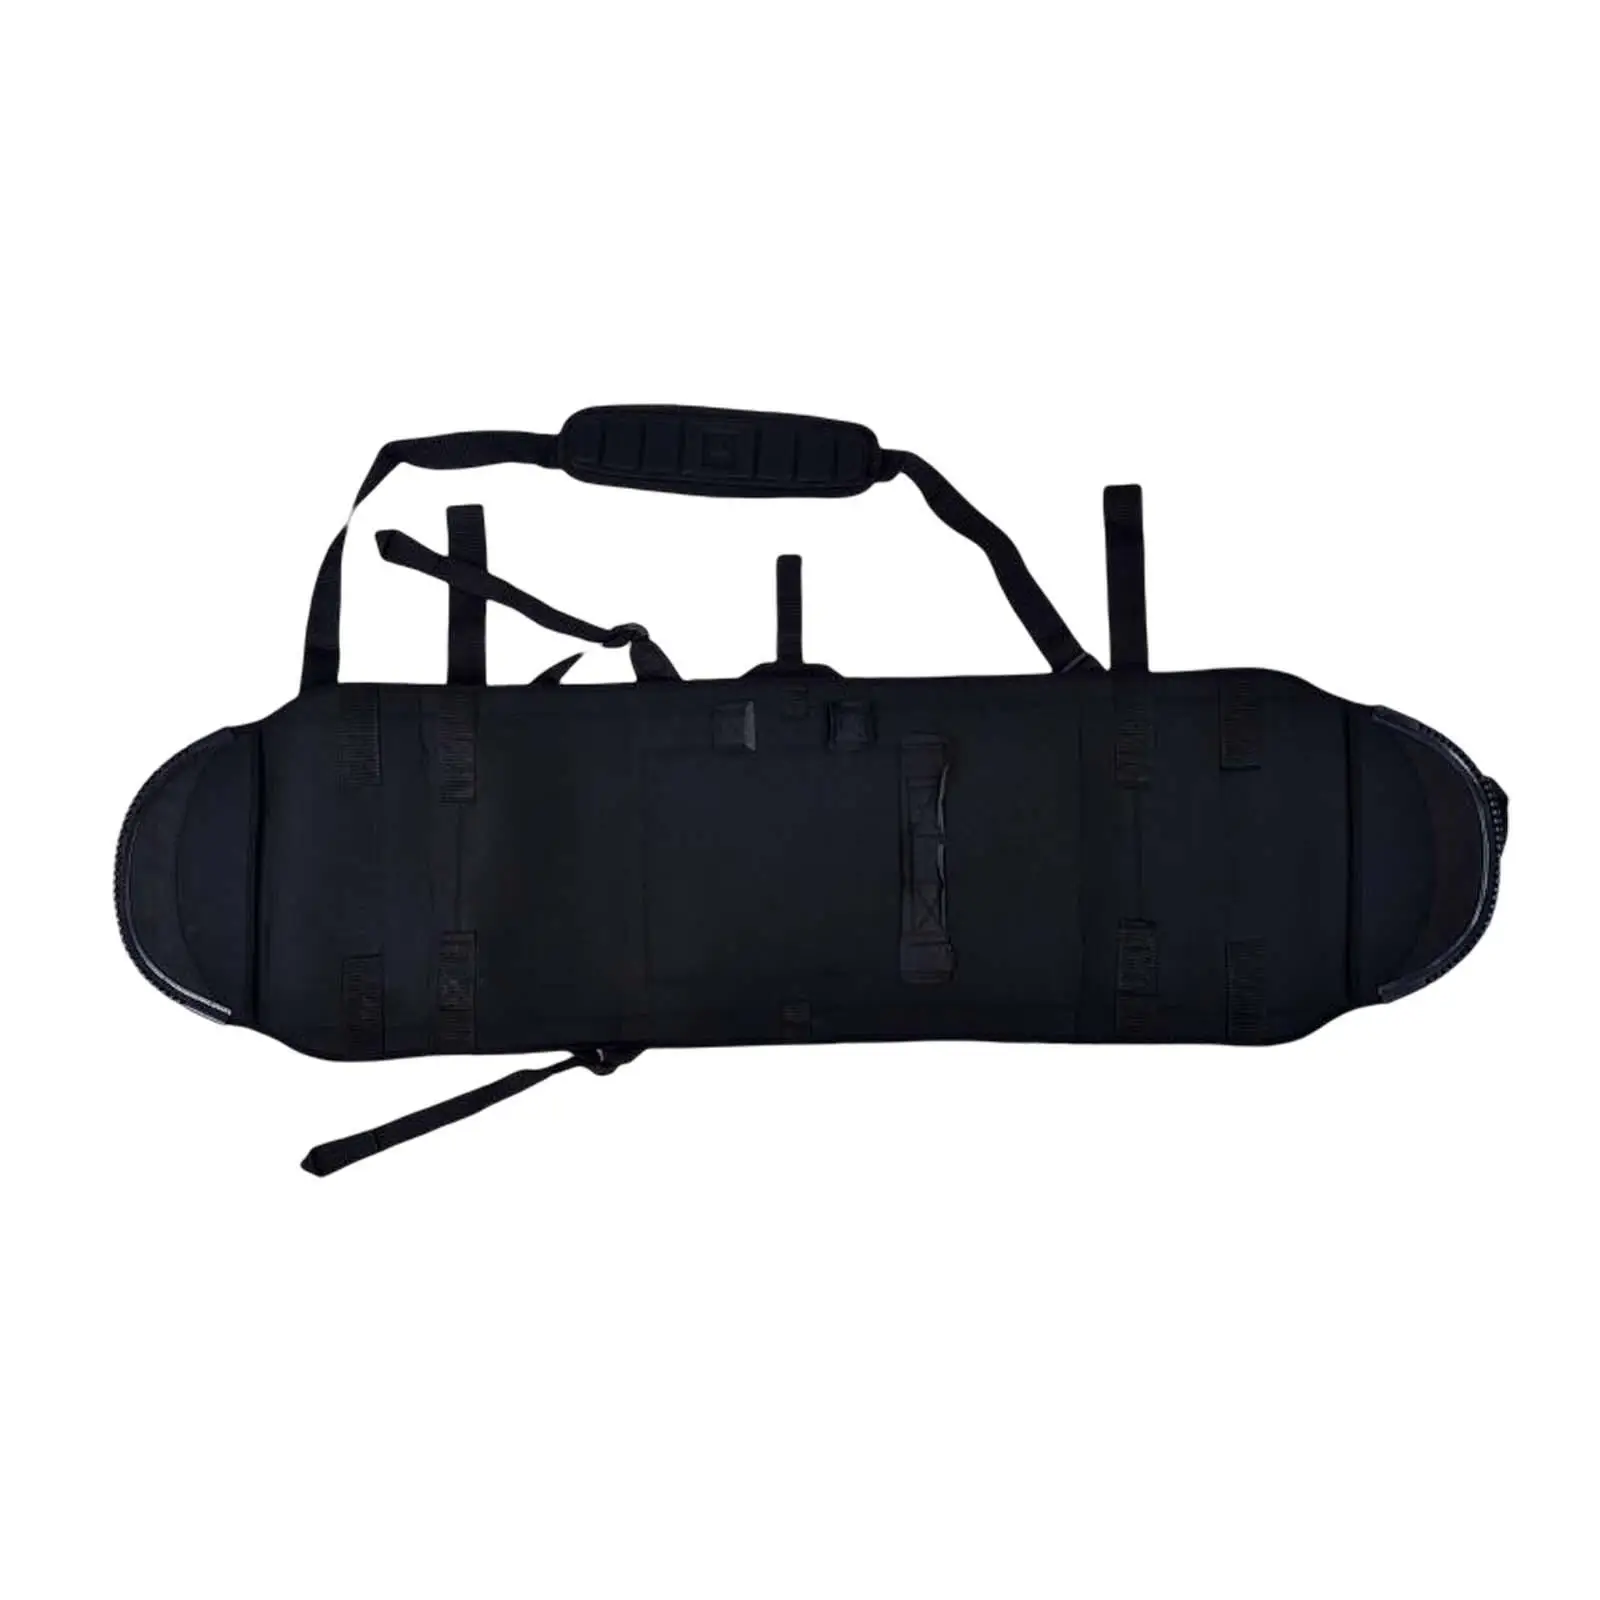 Neoprene Ski Storage Bag Skiing Equipment Suitcase Adjustable Shoulder Strap Snowboard Sleeve Cover Case for Trip Longboard